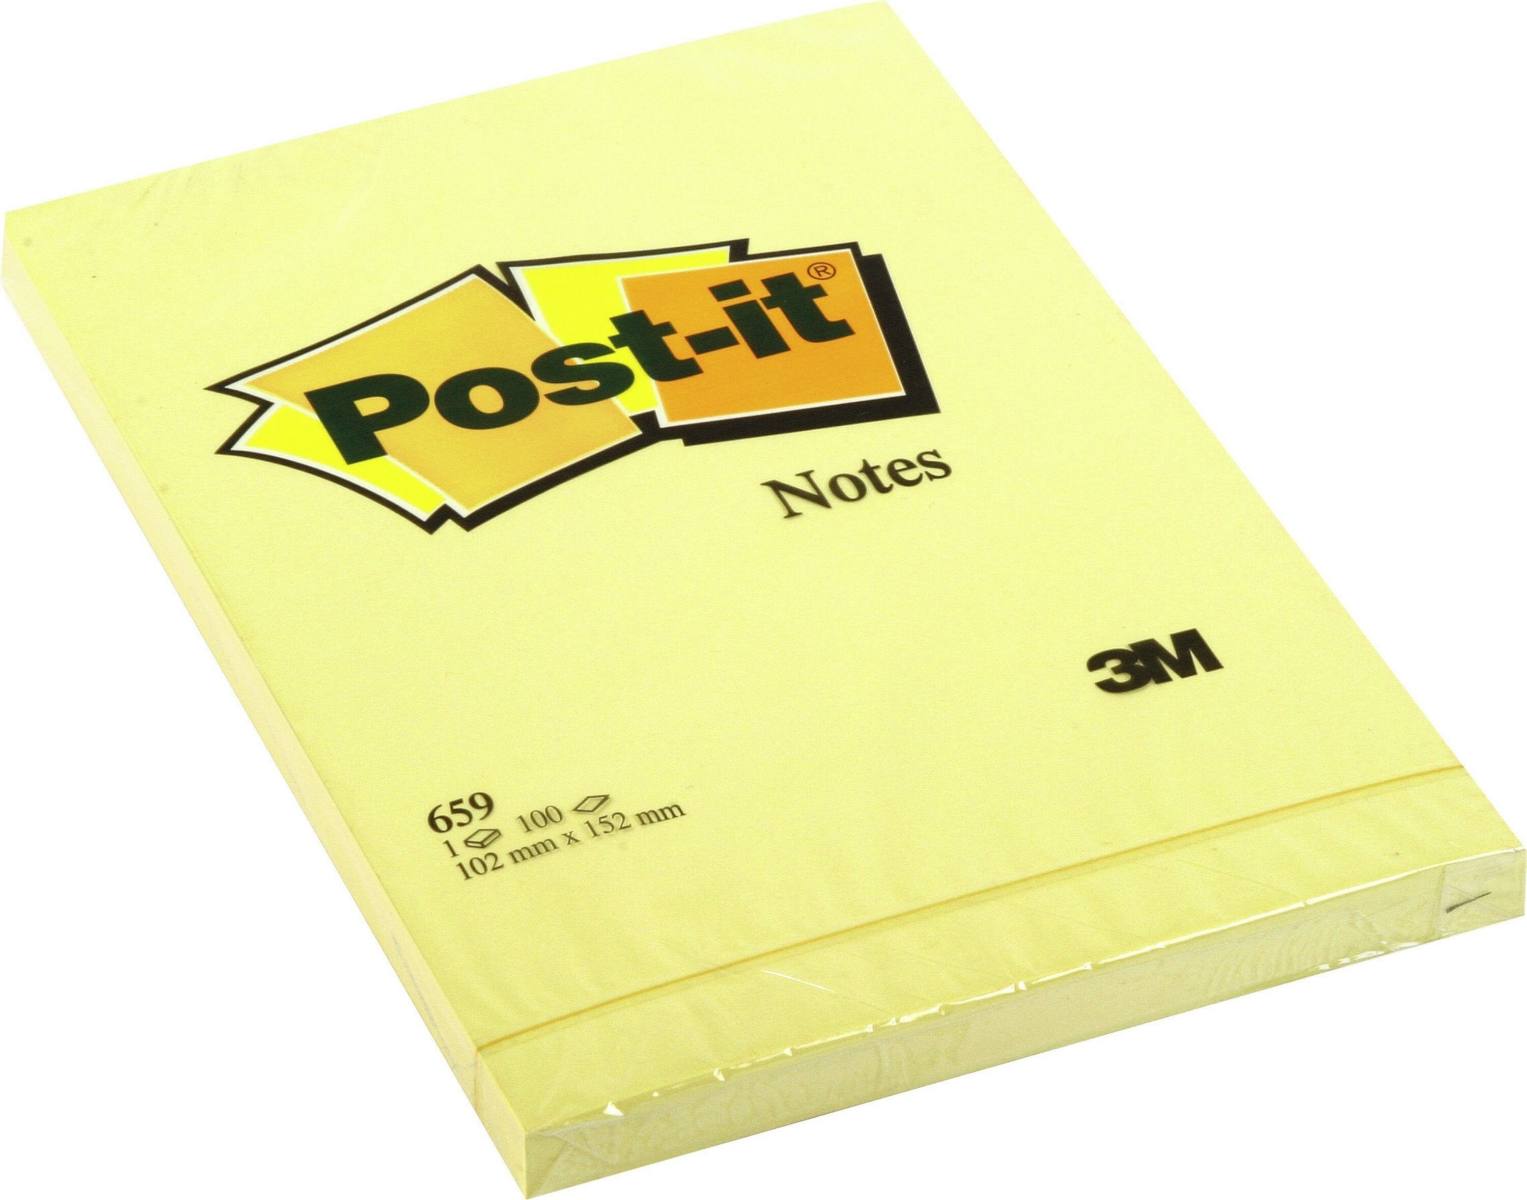 3M Post-it Notes 659, 102 mm x 152 mm, jaune, 1 bloc de 100 feuilles